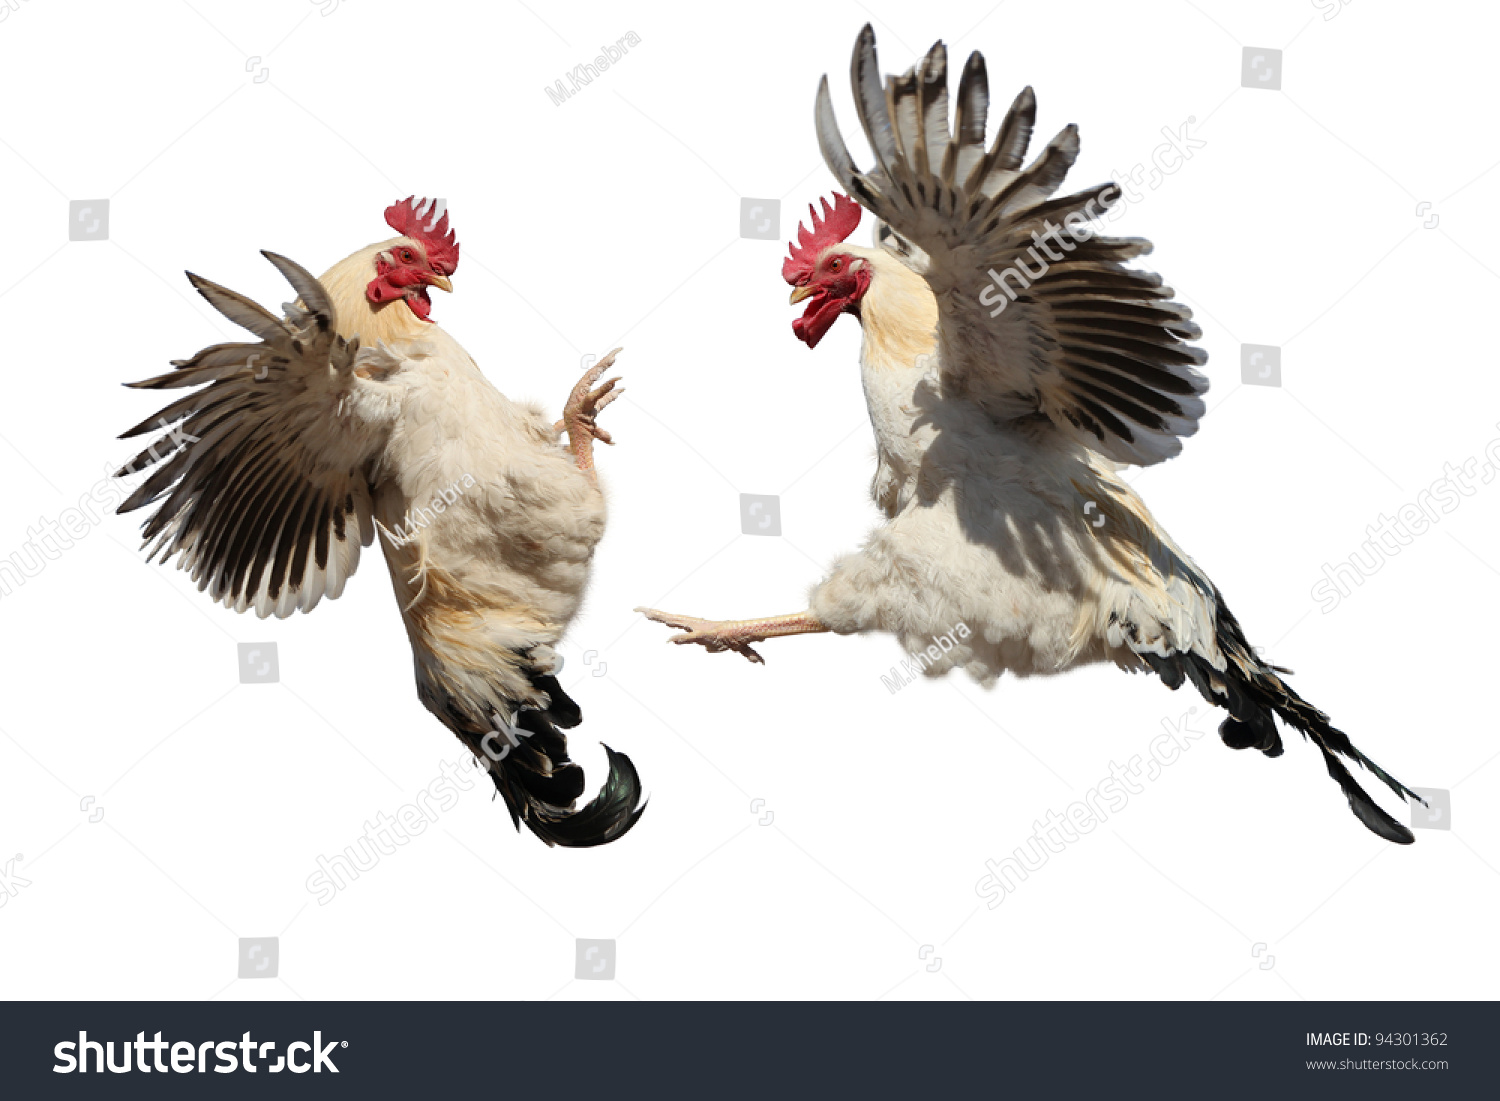 Fighting cock. Боевой петух. Петух летает. Петухи дерутся. Курица летает.